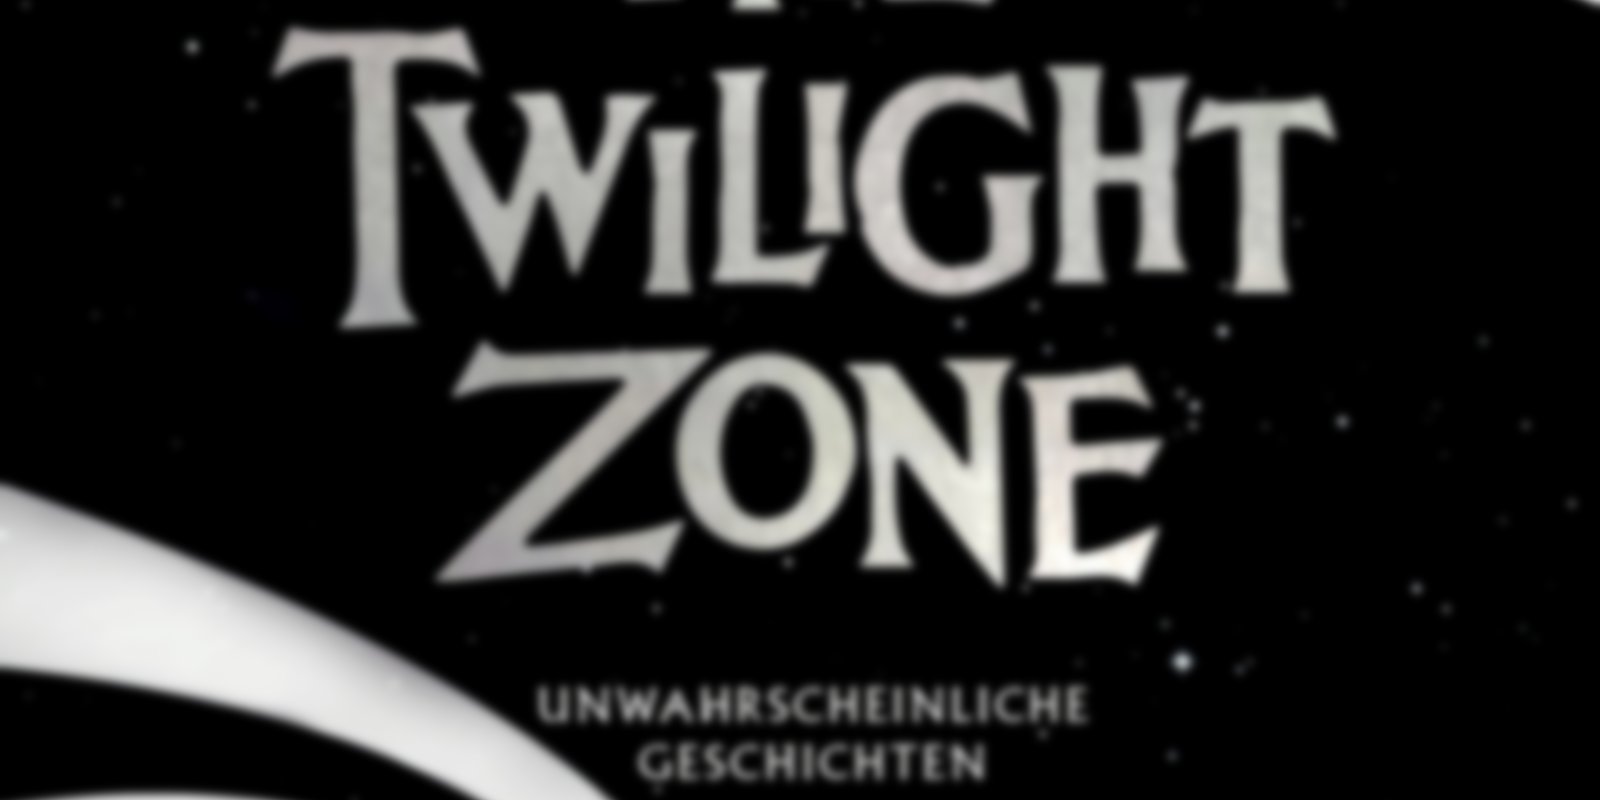 The Twilight Zone - Staffel 4